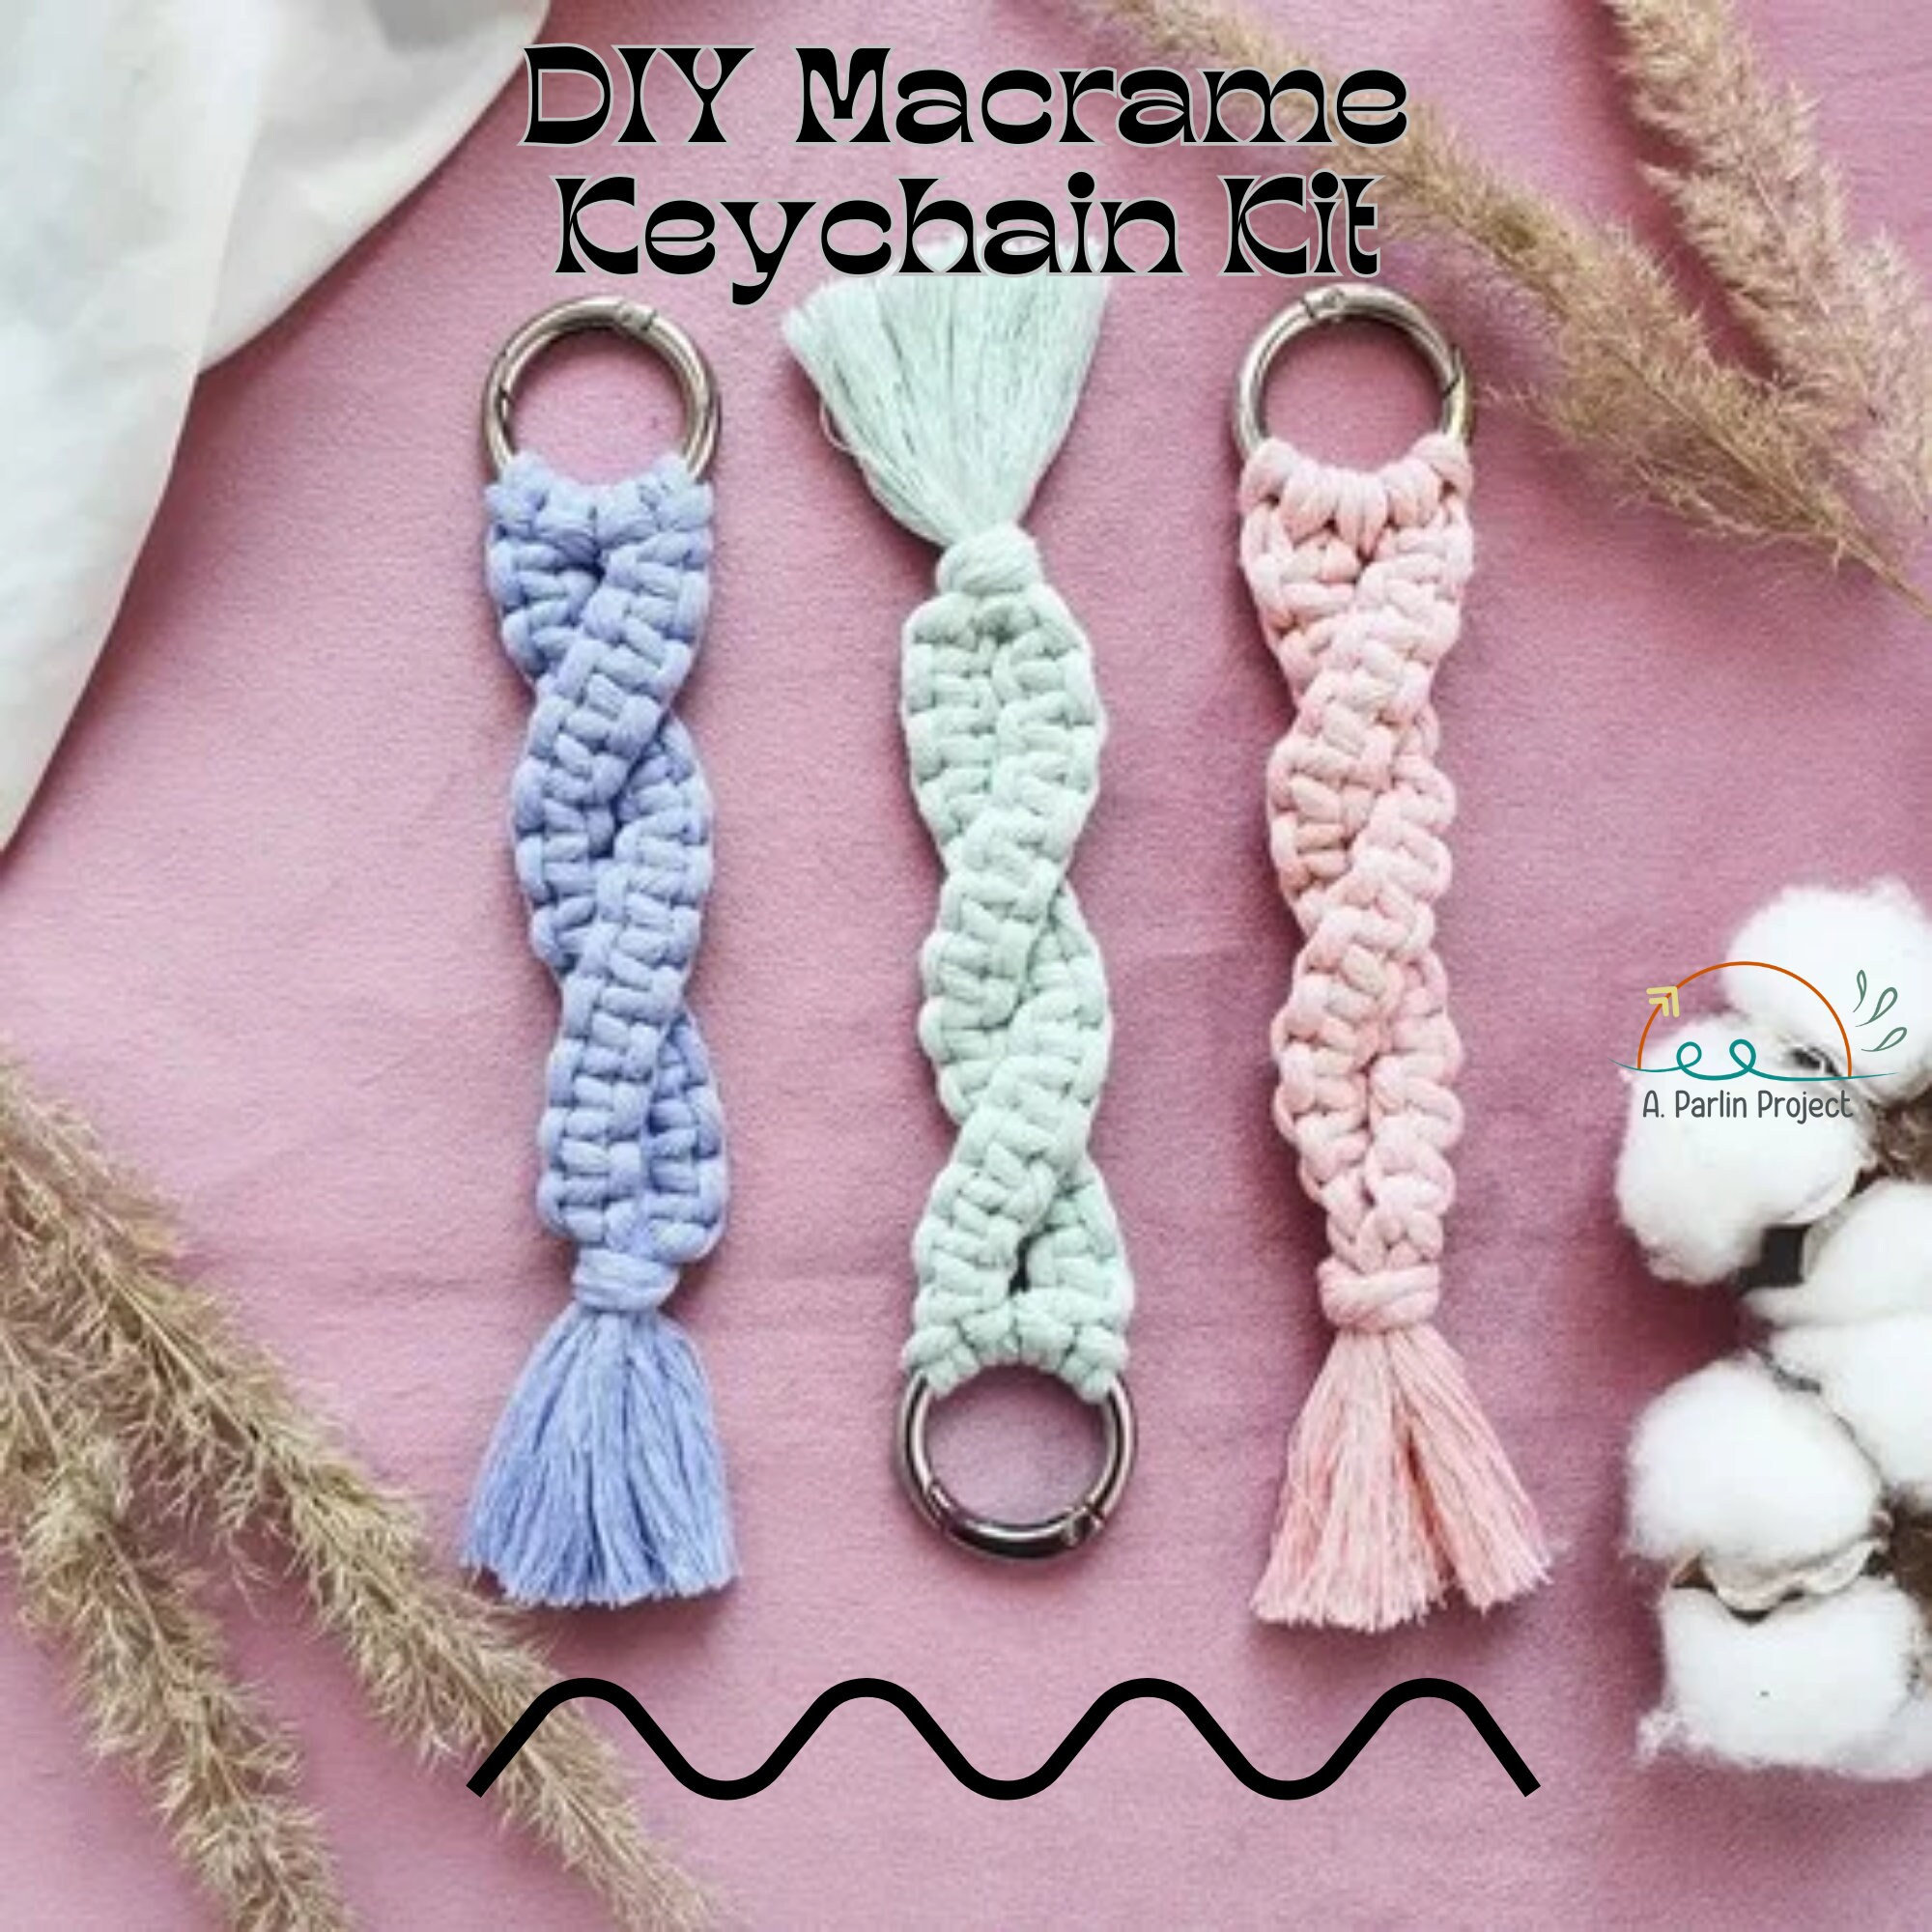 WEBEEDY 8 Sets Macrame Keychain Kit DIY Macrame Autumn Colors Keychain for  Boho Bag Charm Macrame Kit for Adults Beginners